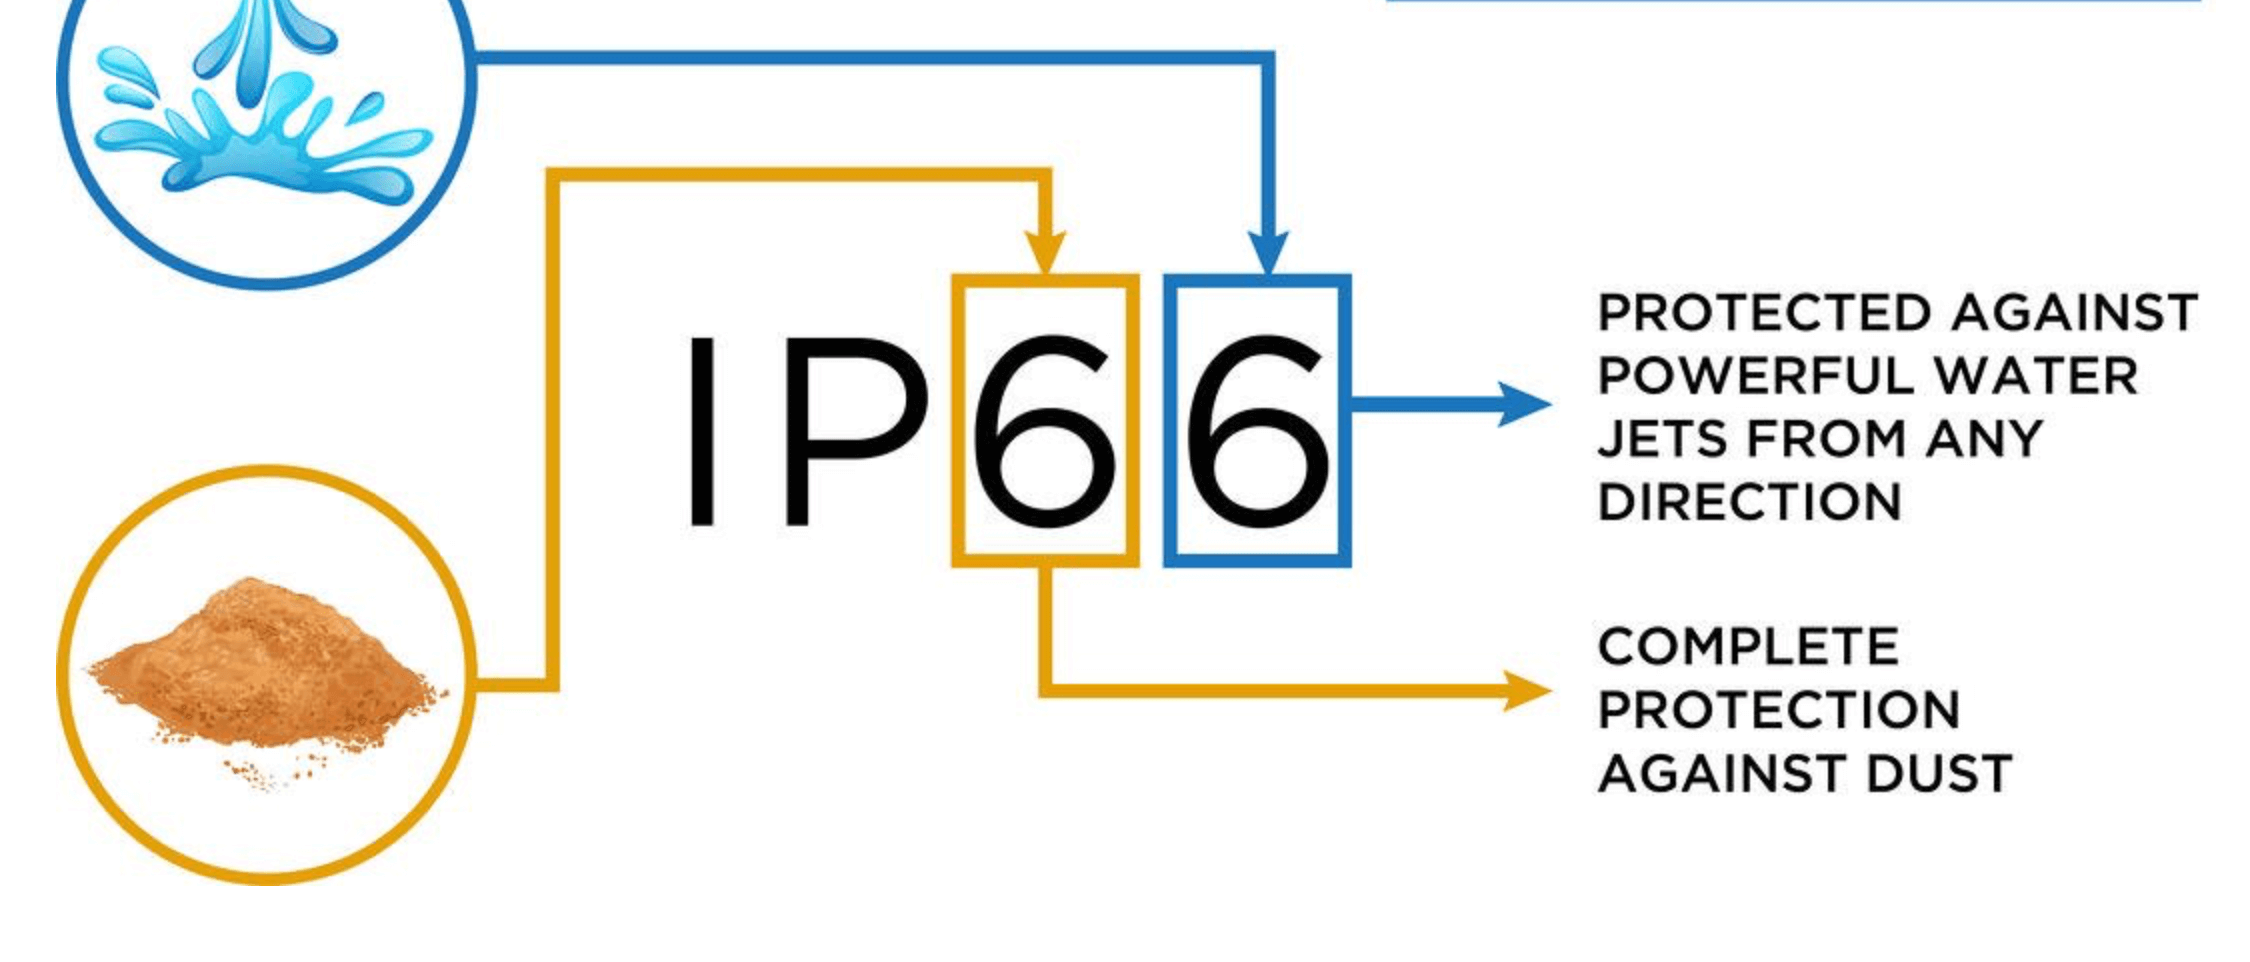 IP66 rating